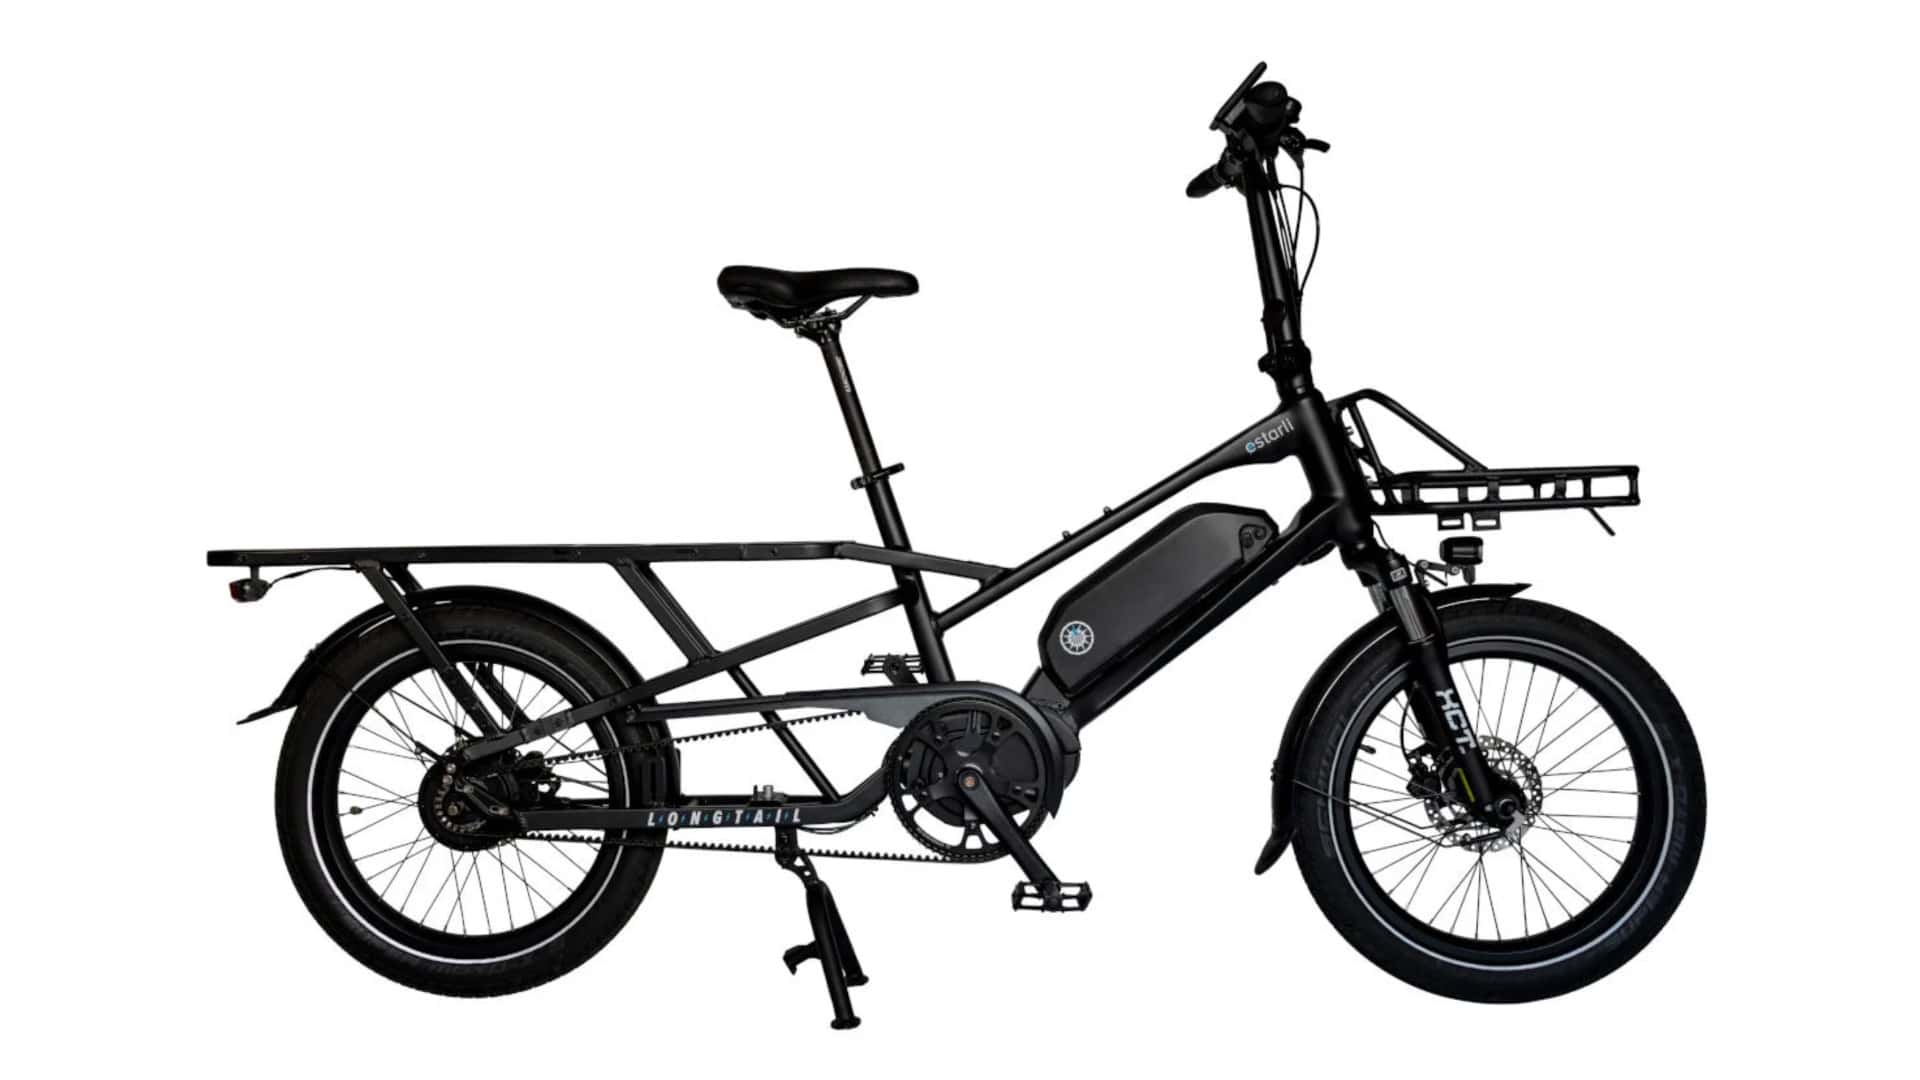 uk brand estarli unveils new longtail electric cargo bike